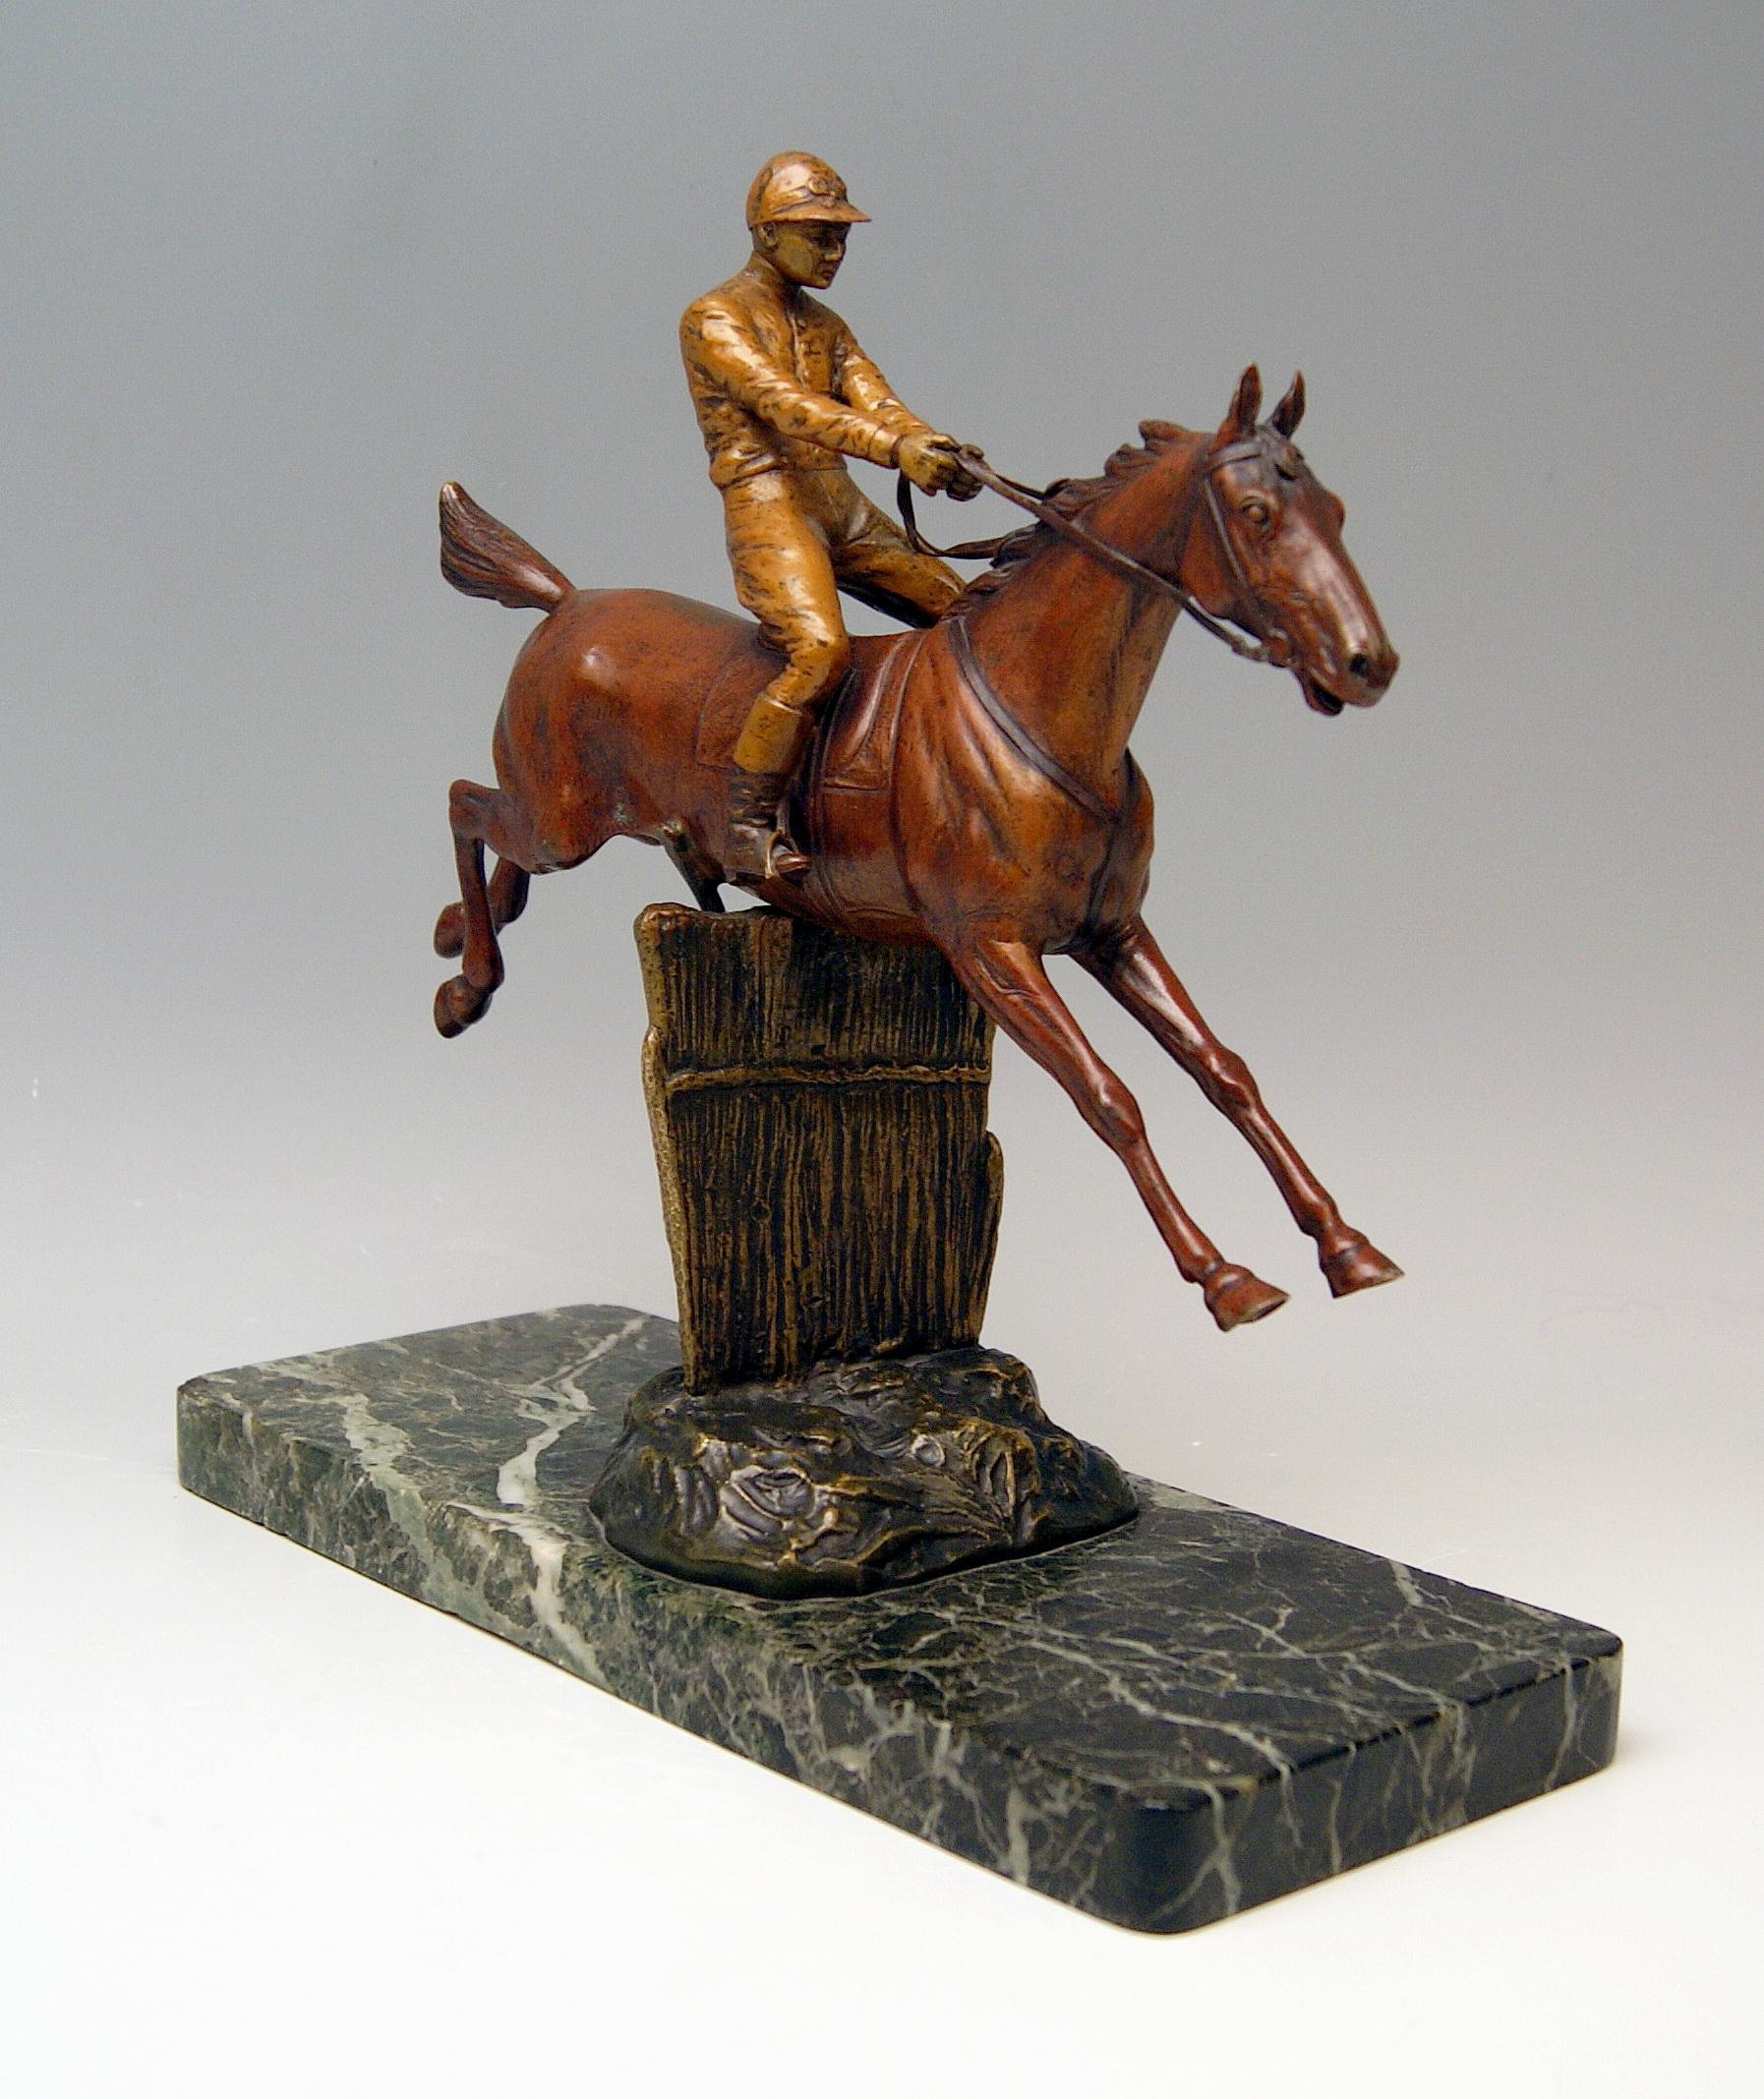 Stunning Bronze Figurine Group: Show Jumper Riding on Jumping Horse

ORIGIN OF MANUFACTORY: VIENNA / Franz Bergmann Vienna Bronze Foundry
DATING: manufactured circa 1905
MATERIAL: solid bronze 
TECHNIQUE OF MANUFACTURE: bronze / casting